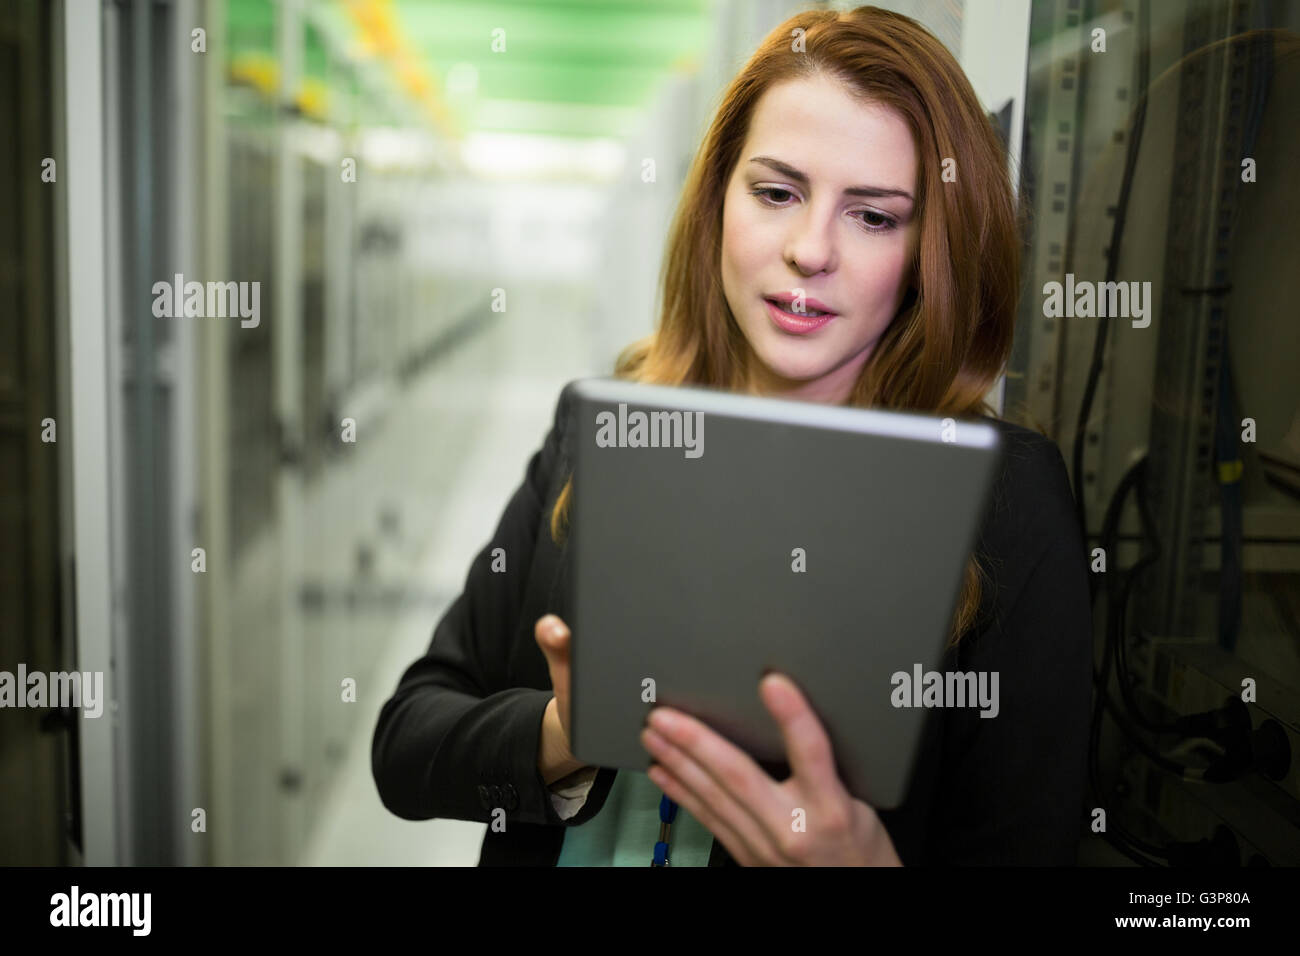 Technician using digital tablet Stock Photo